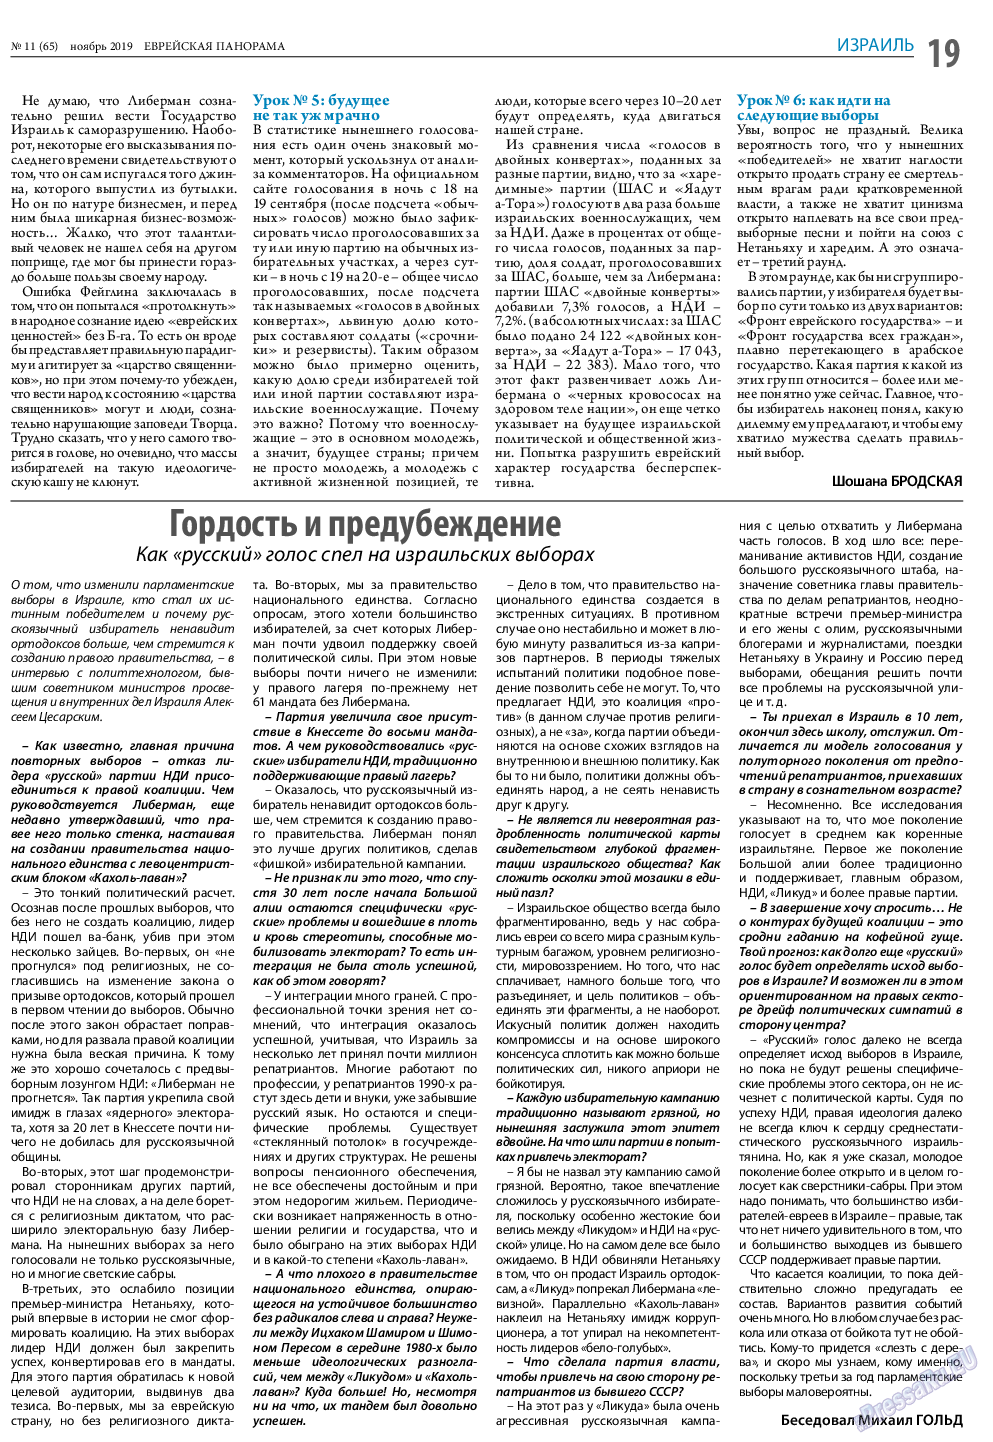 Еврейская панорама, газета. 2019 №11 стр.19